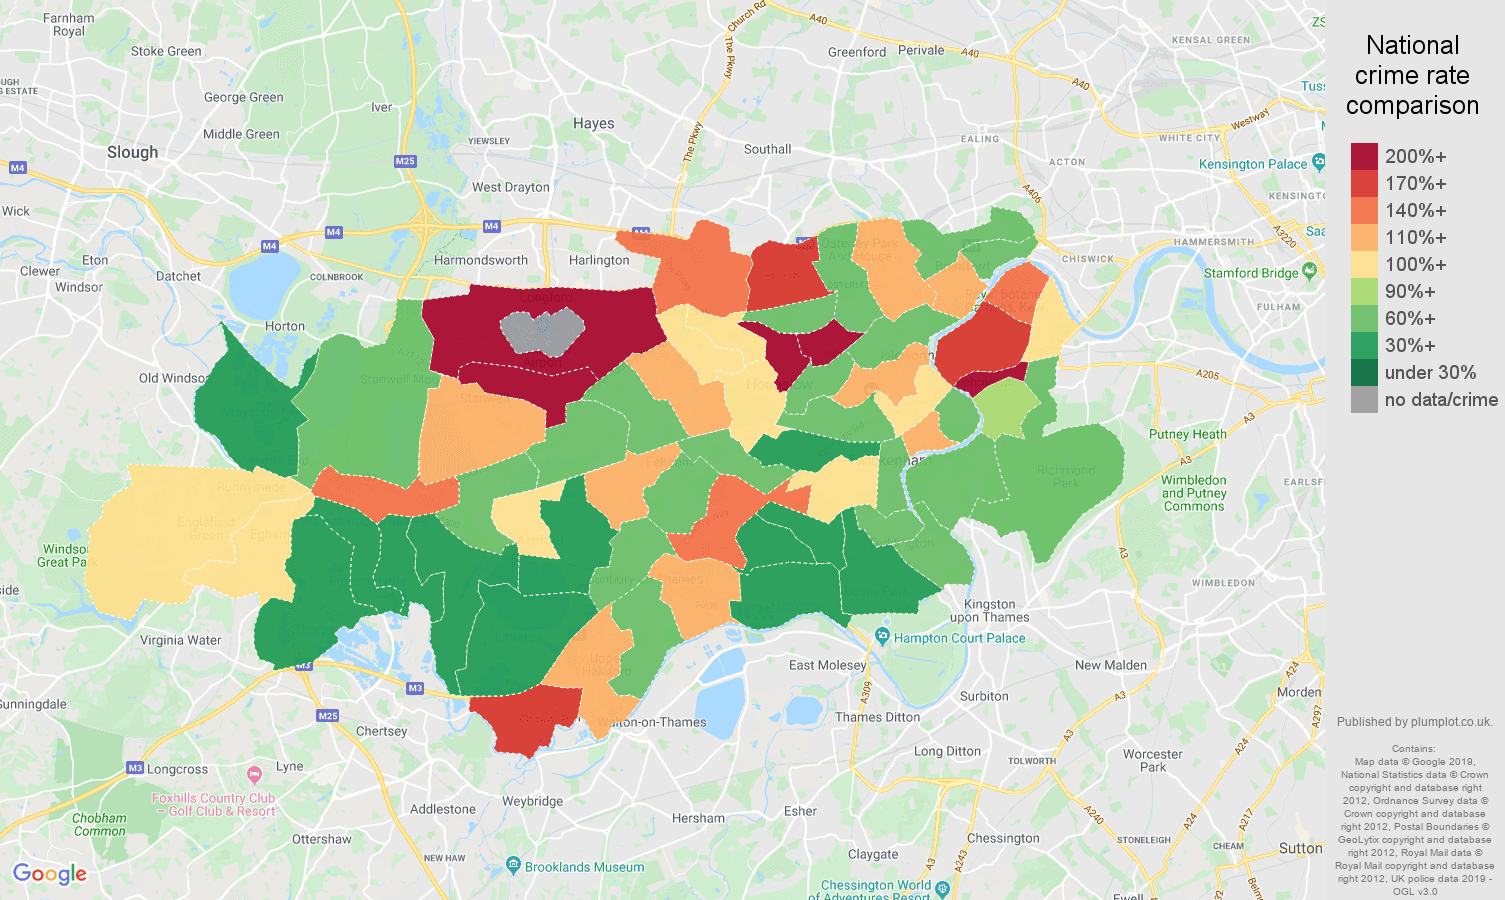 Twickenham other theft crime rate comparison map